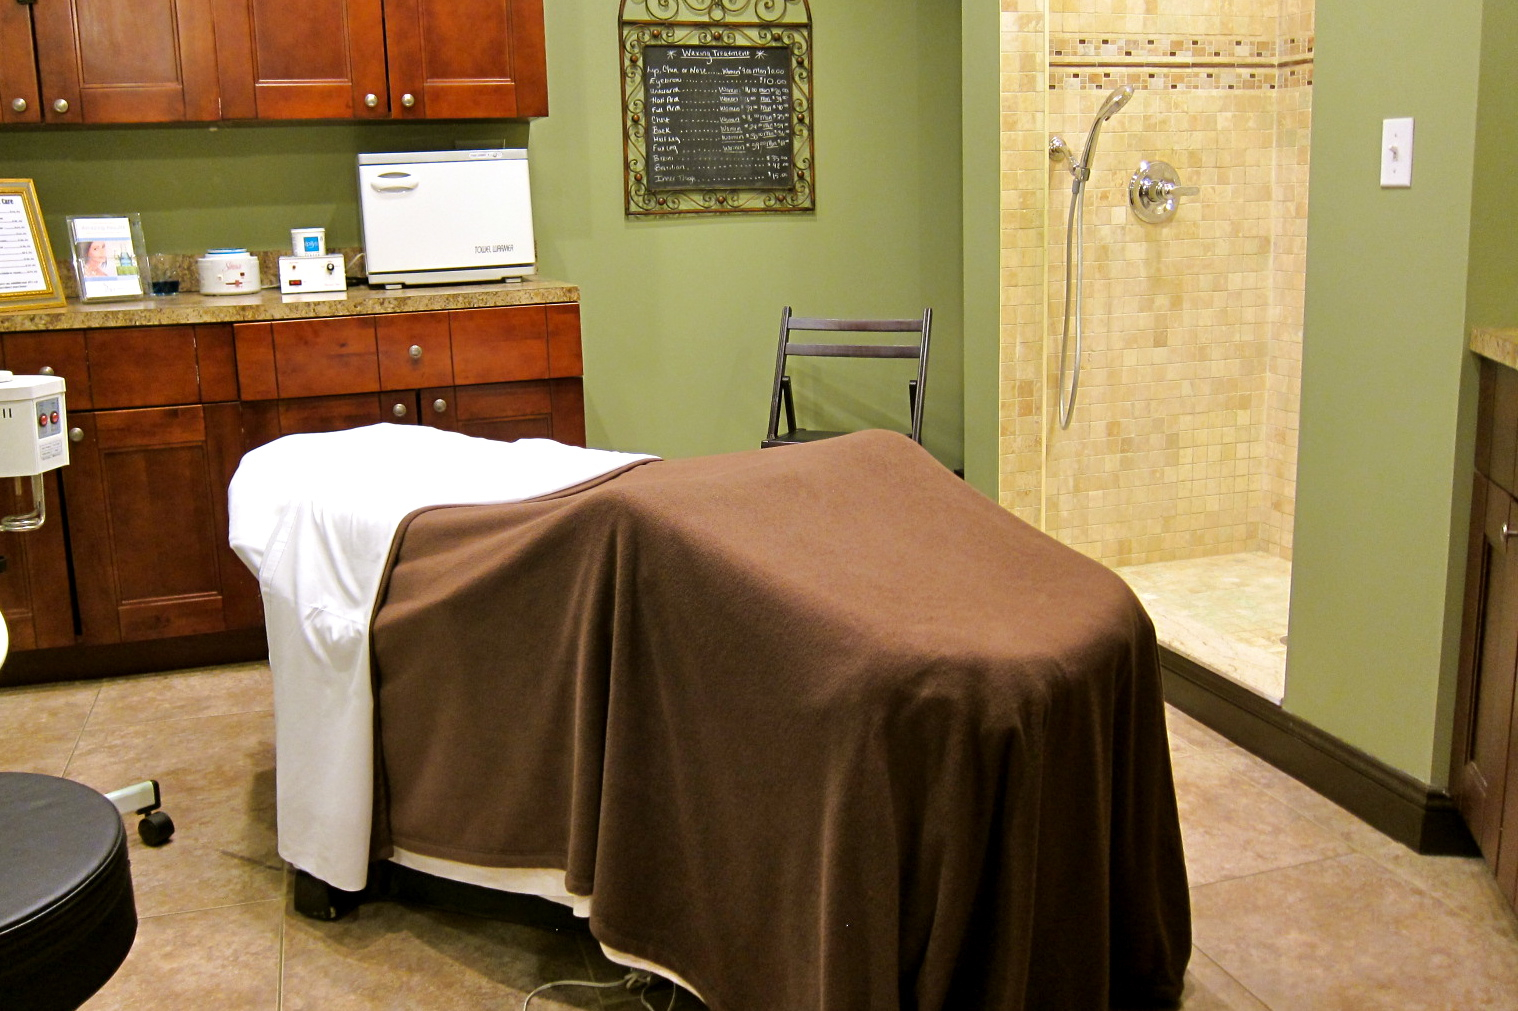 Photo of LaVida Massage of Staten Island in Staten Island City, New York, United States - 3 Picture of Point of interest, Establishment, Health, Spa, Beauty salon